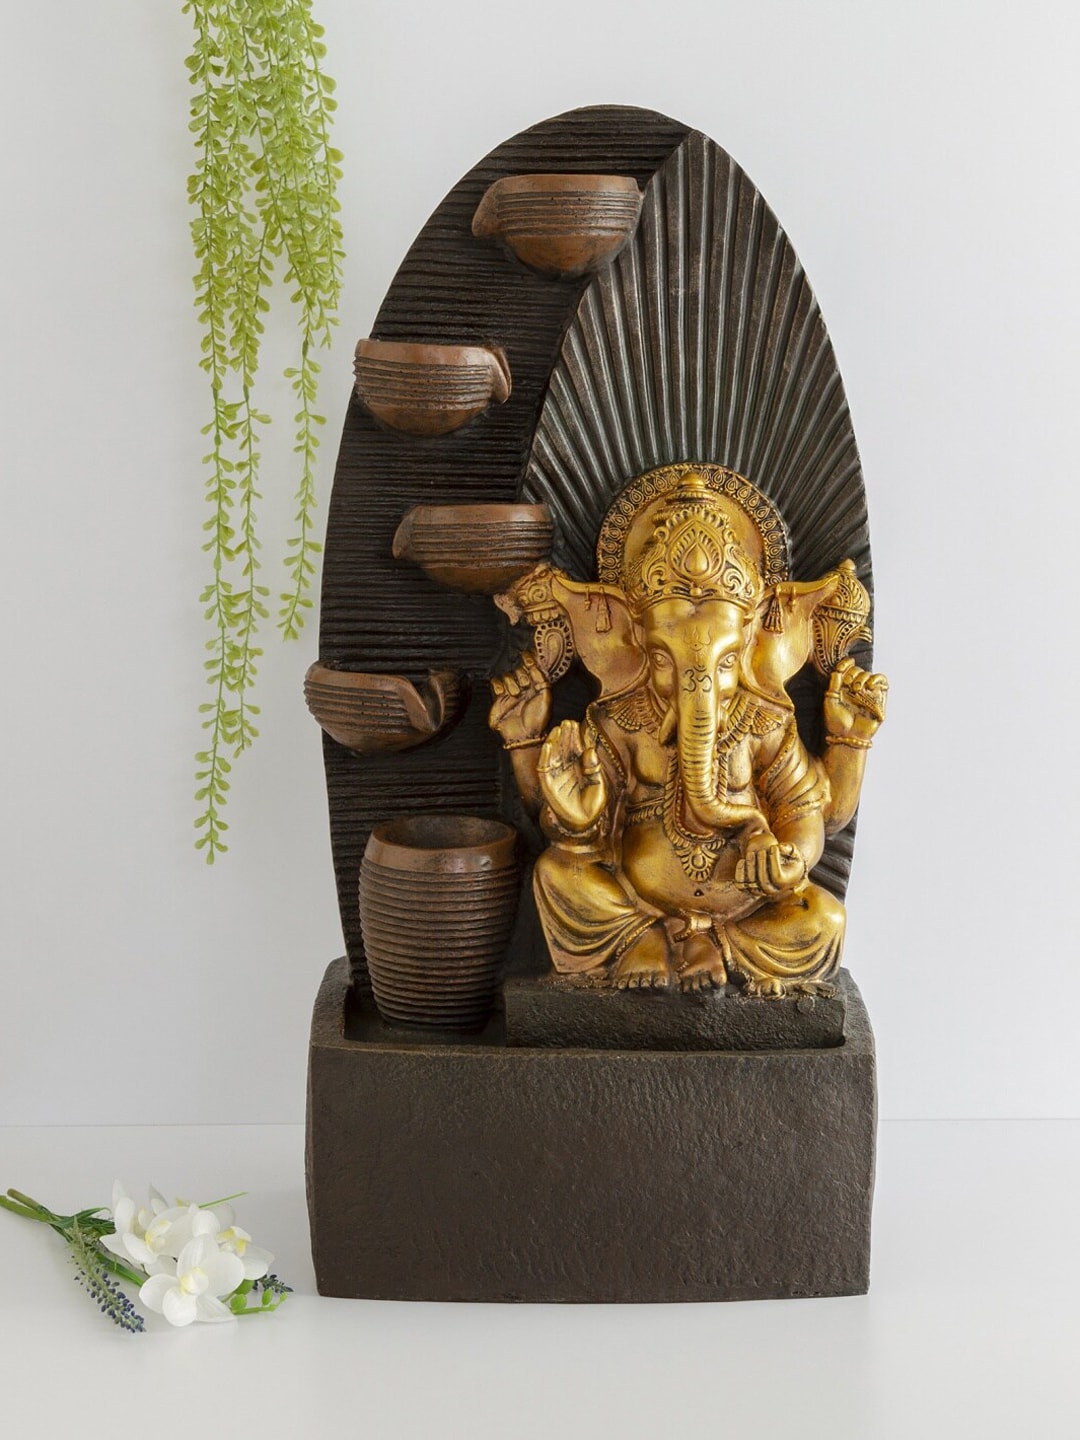 Home Centre Brown & Gold-Toned Ceramic Casade Harmony Ganesha Figurine Fountain Price in India